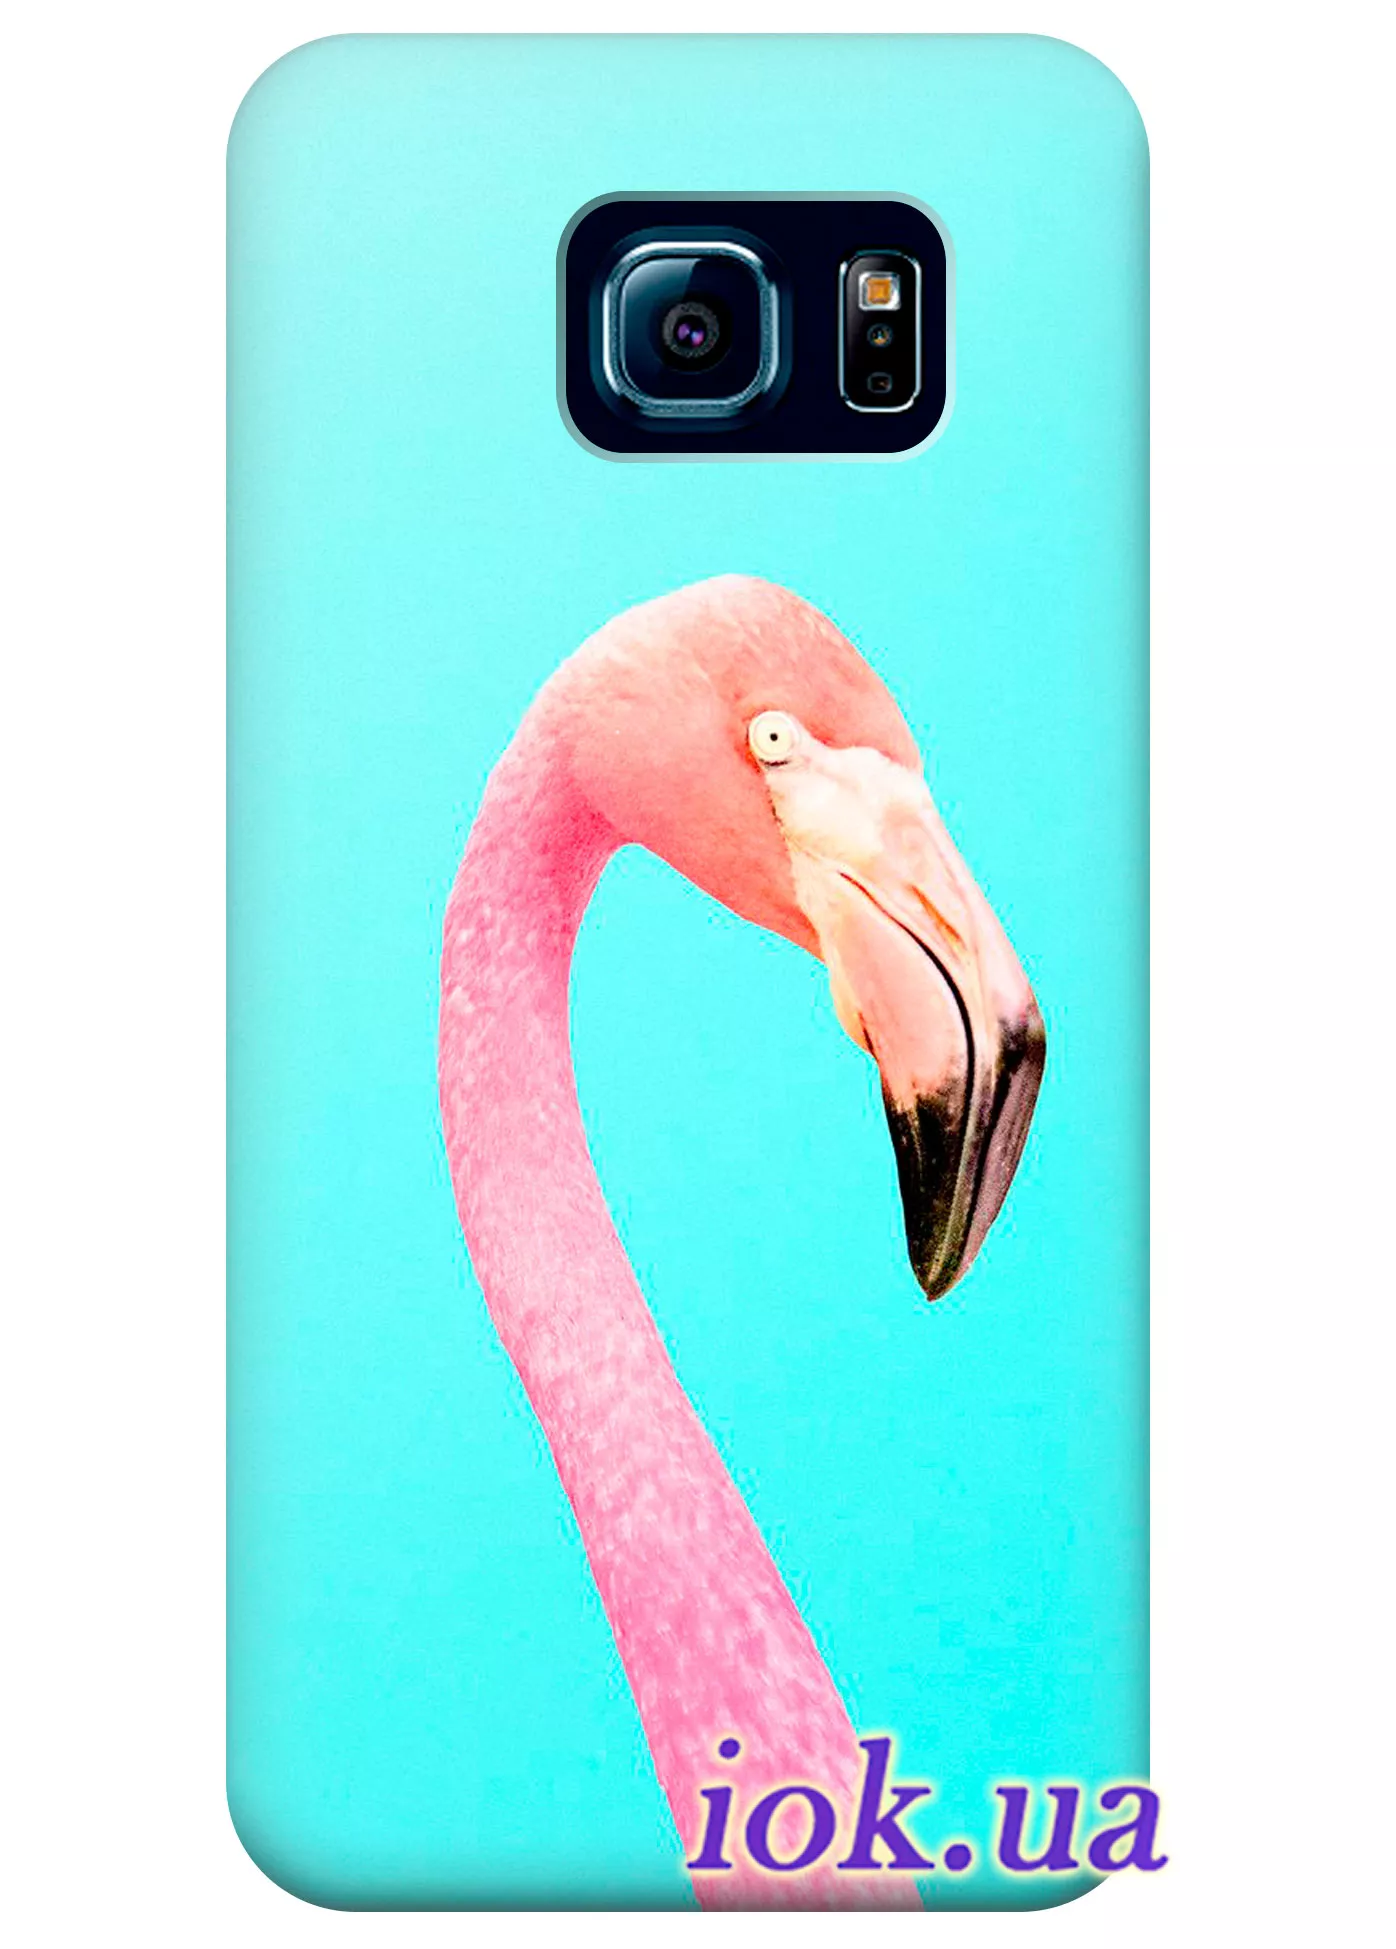 Чехол для Galaxy S6 - Необычная птица